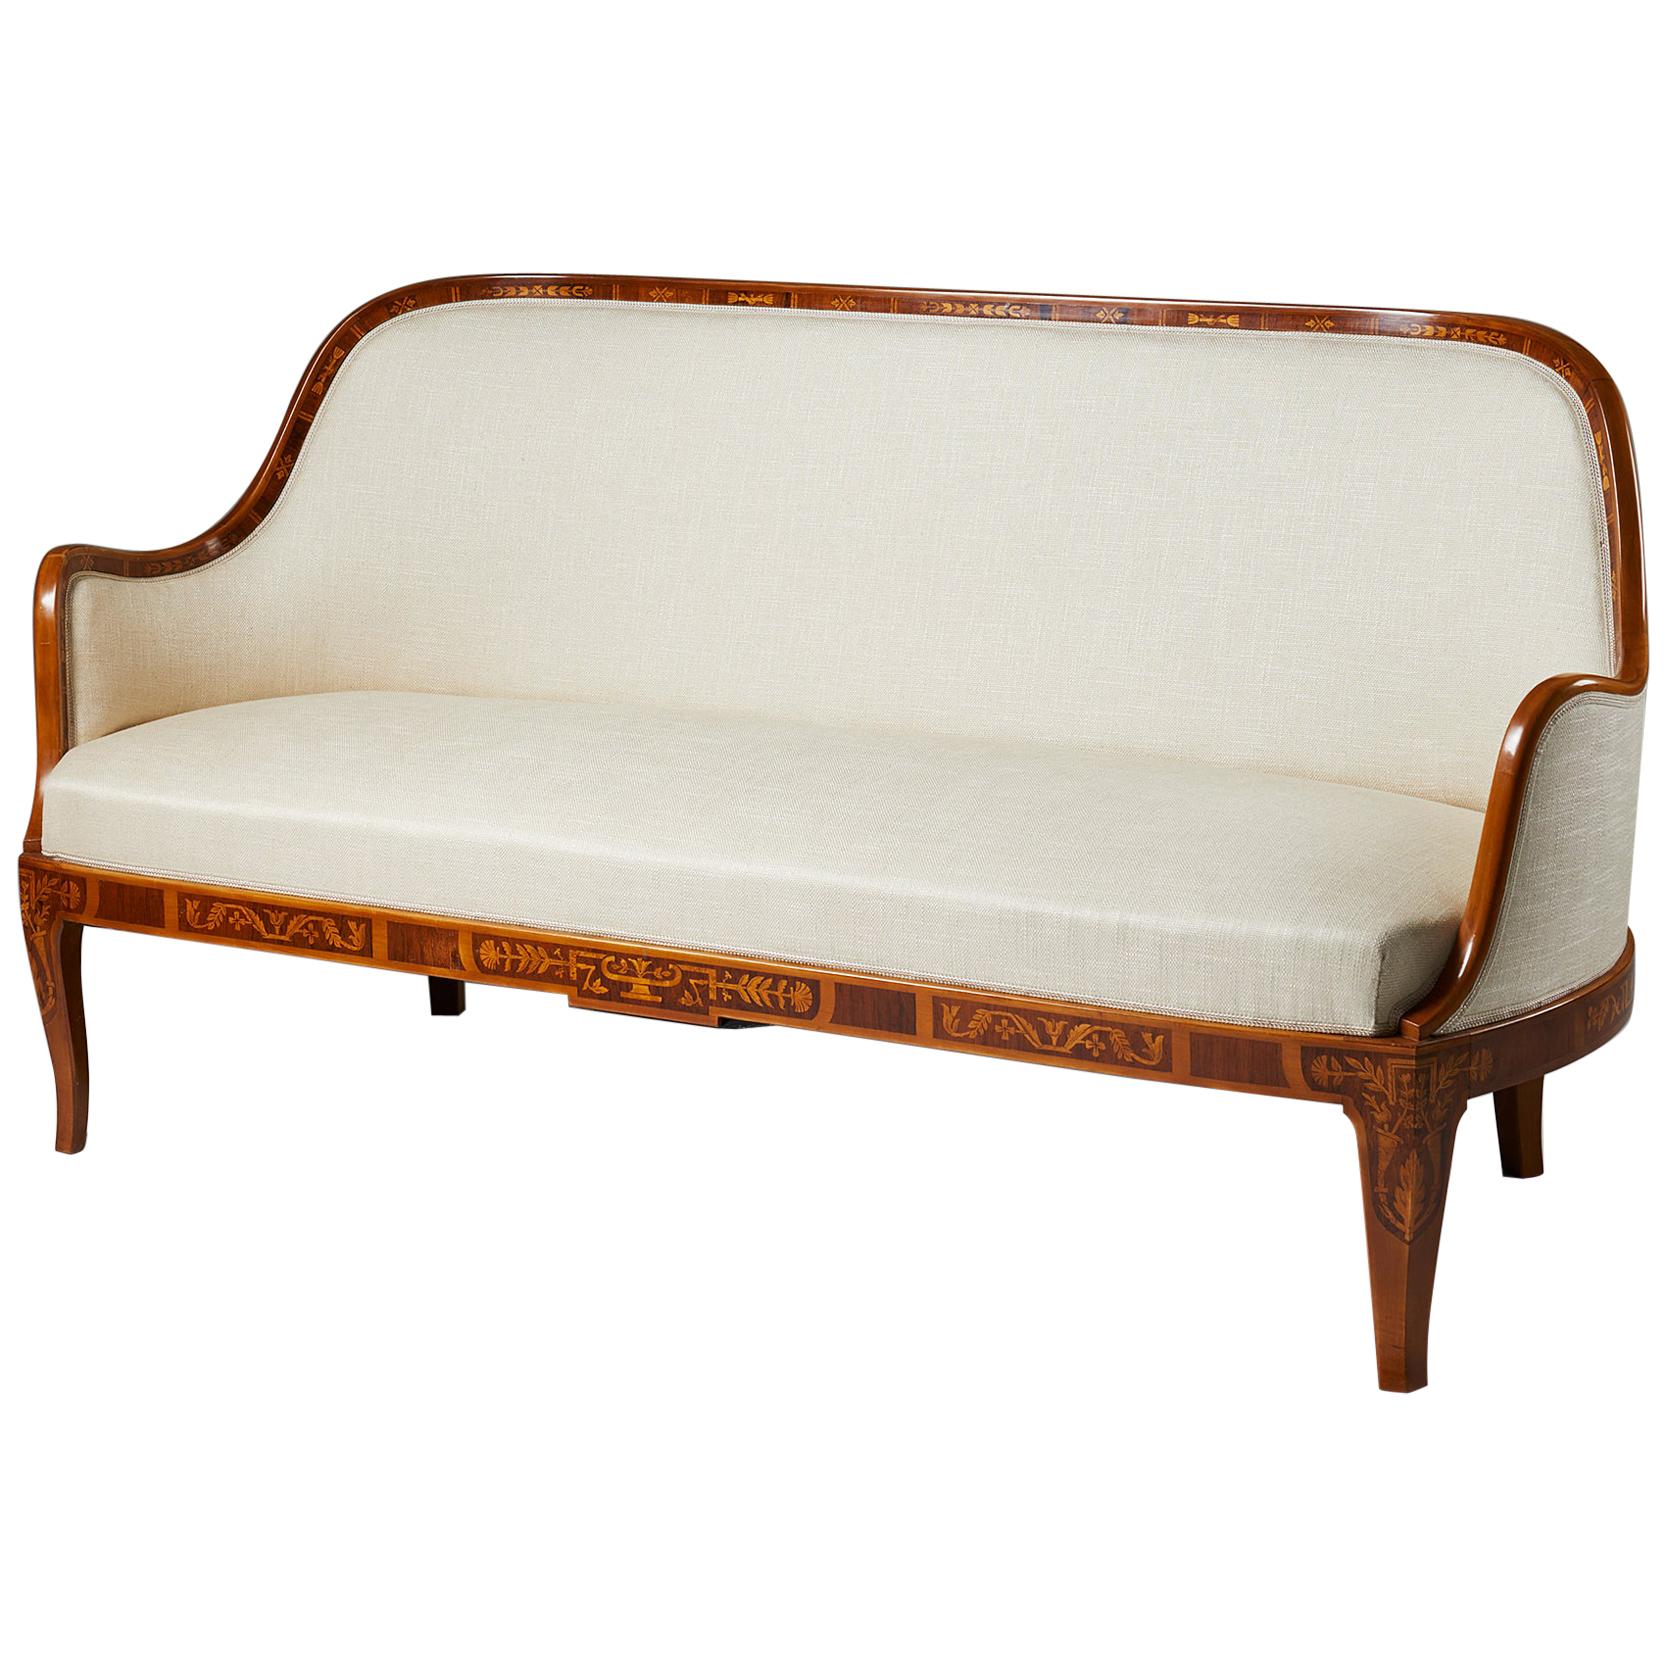 Swedish Grace Sofa Designed by Carl Malmsten, Mahogany Frame, Sweden, 1929 For Sale